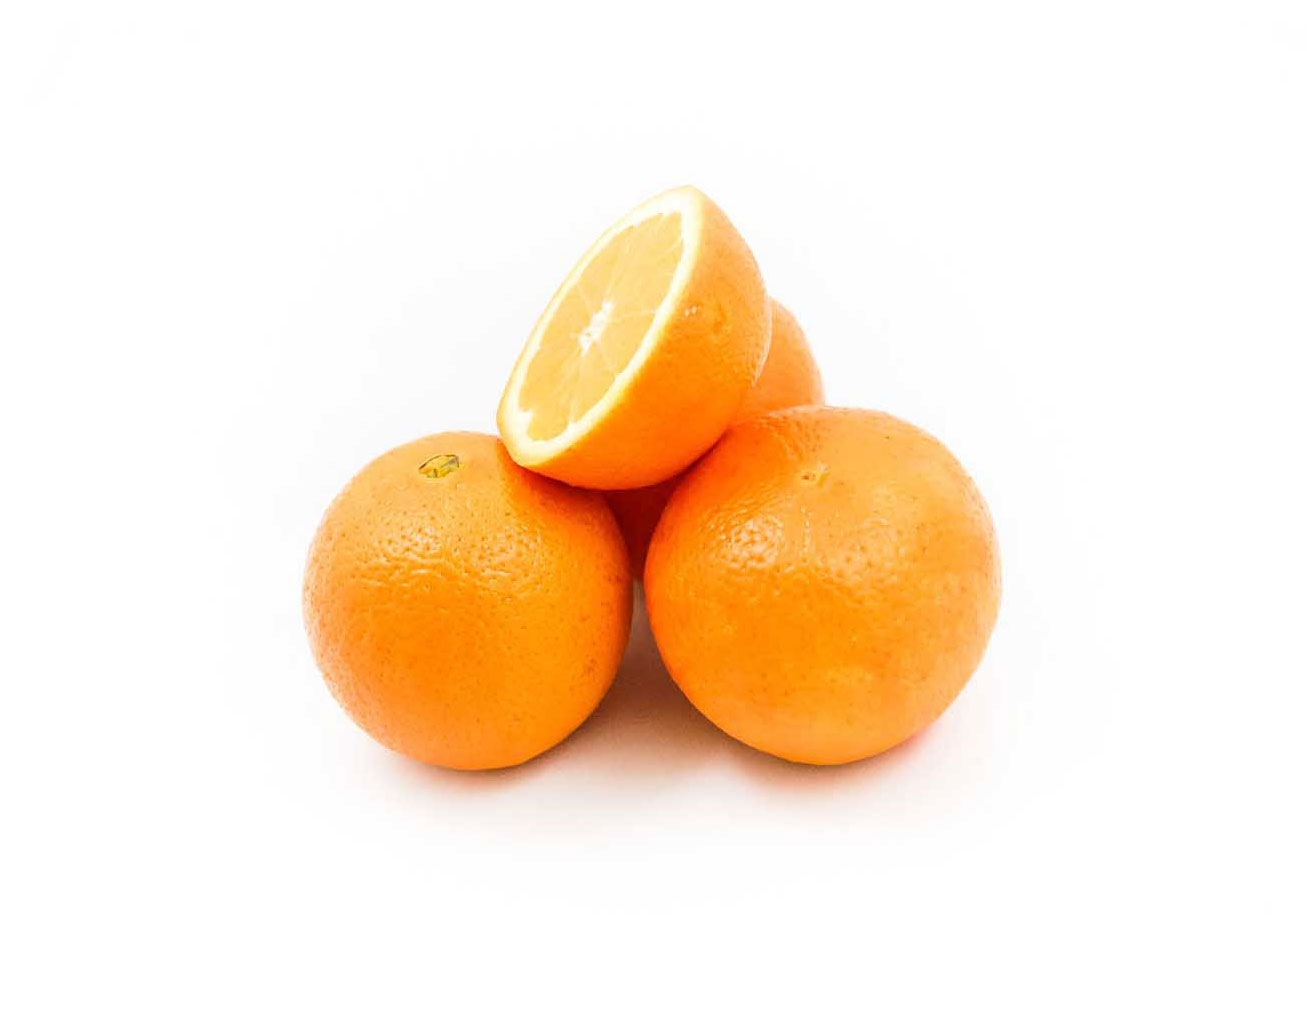 Stacked Oranges